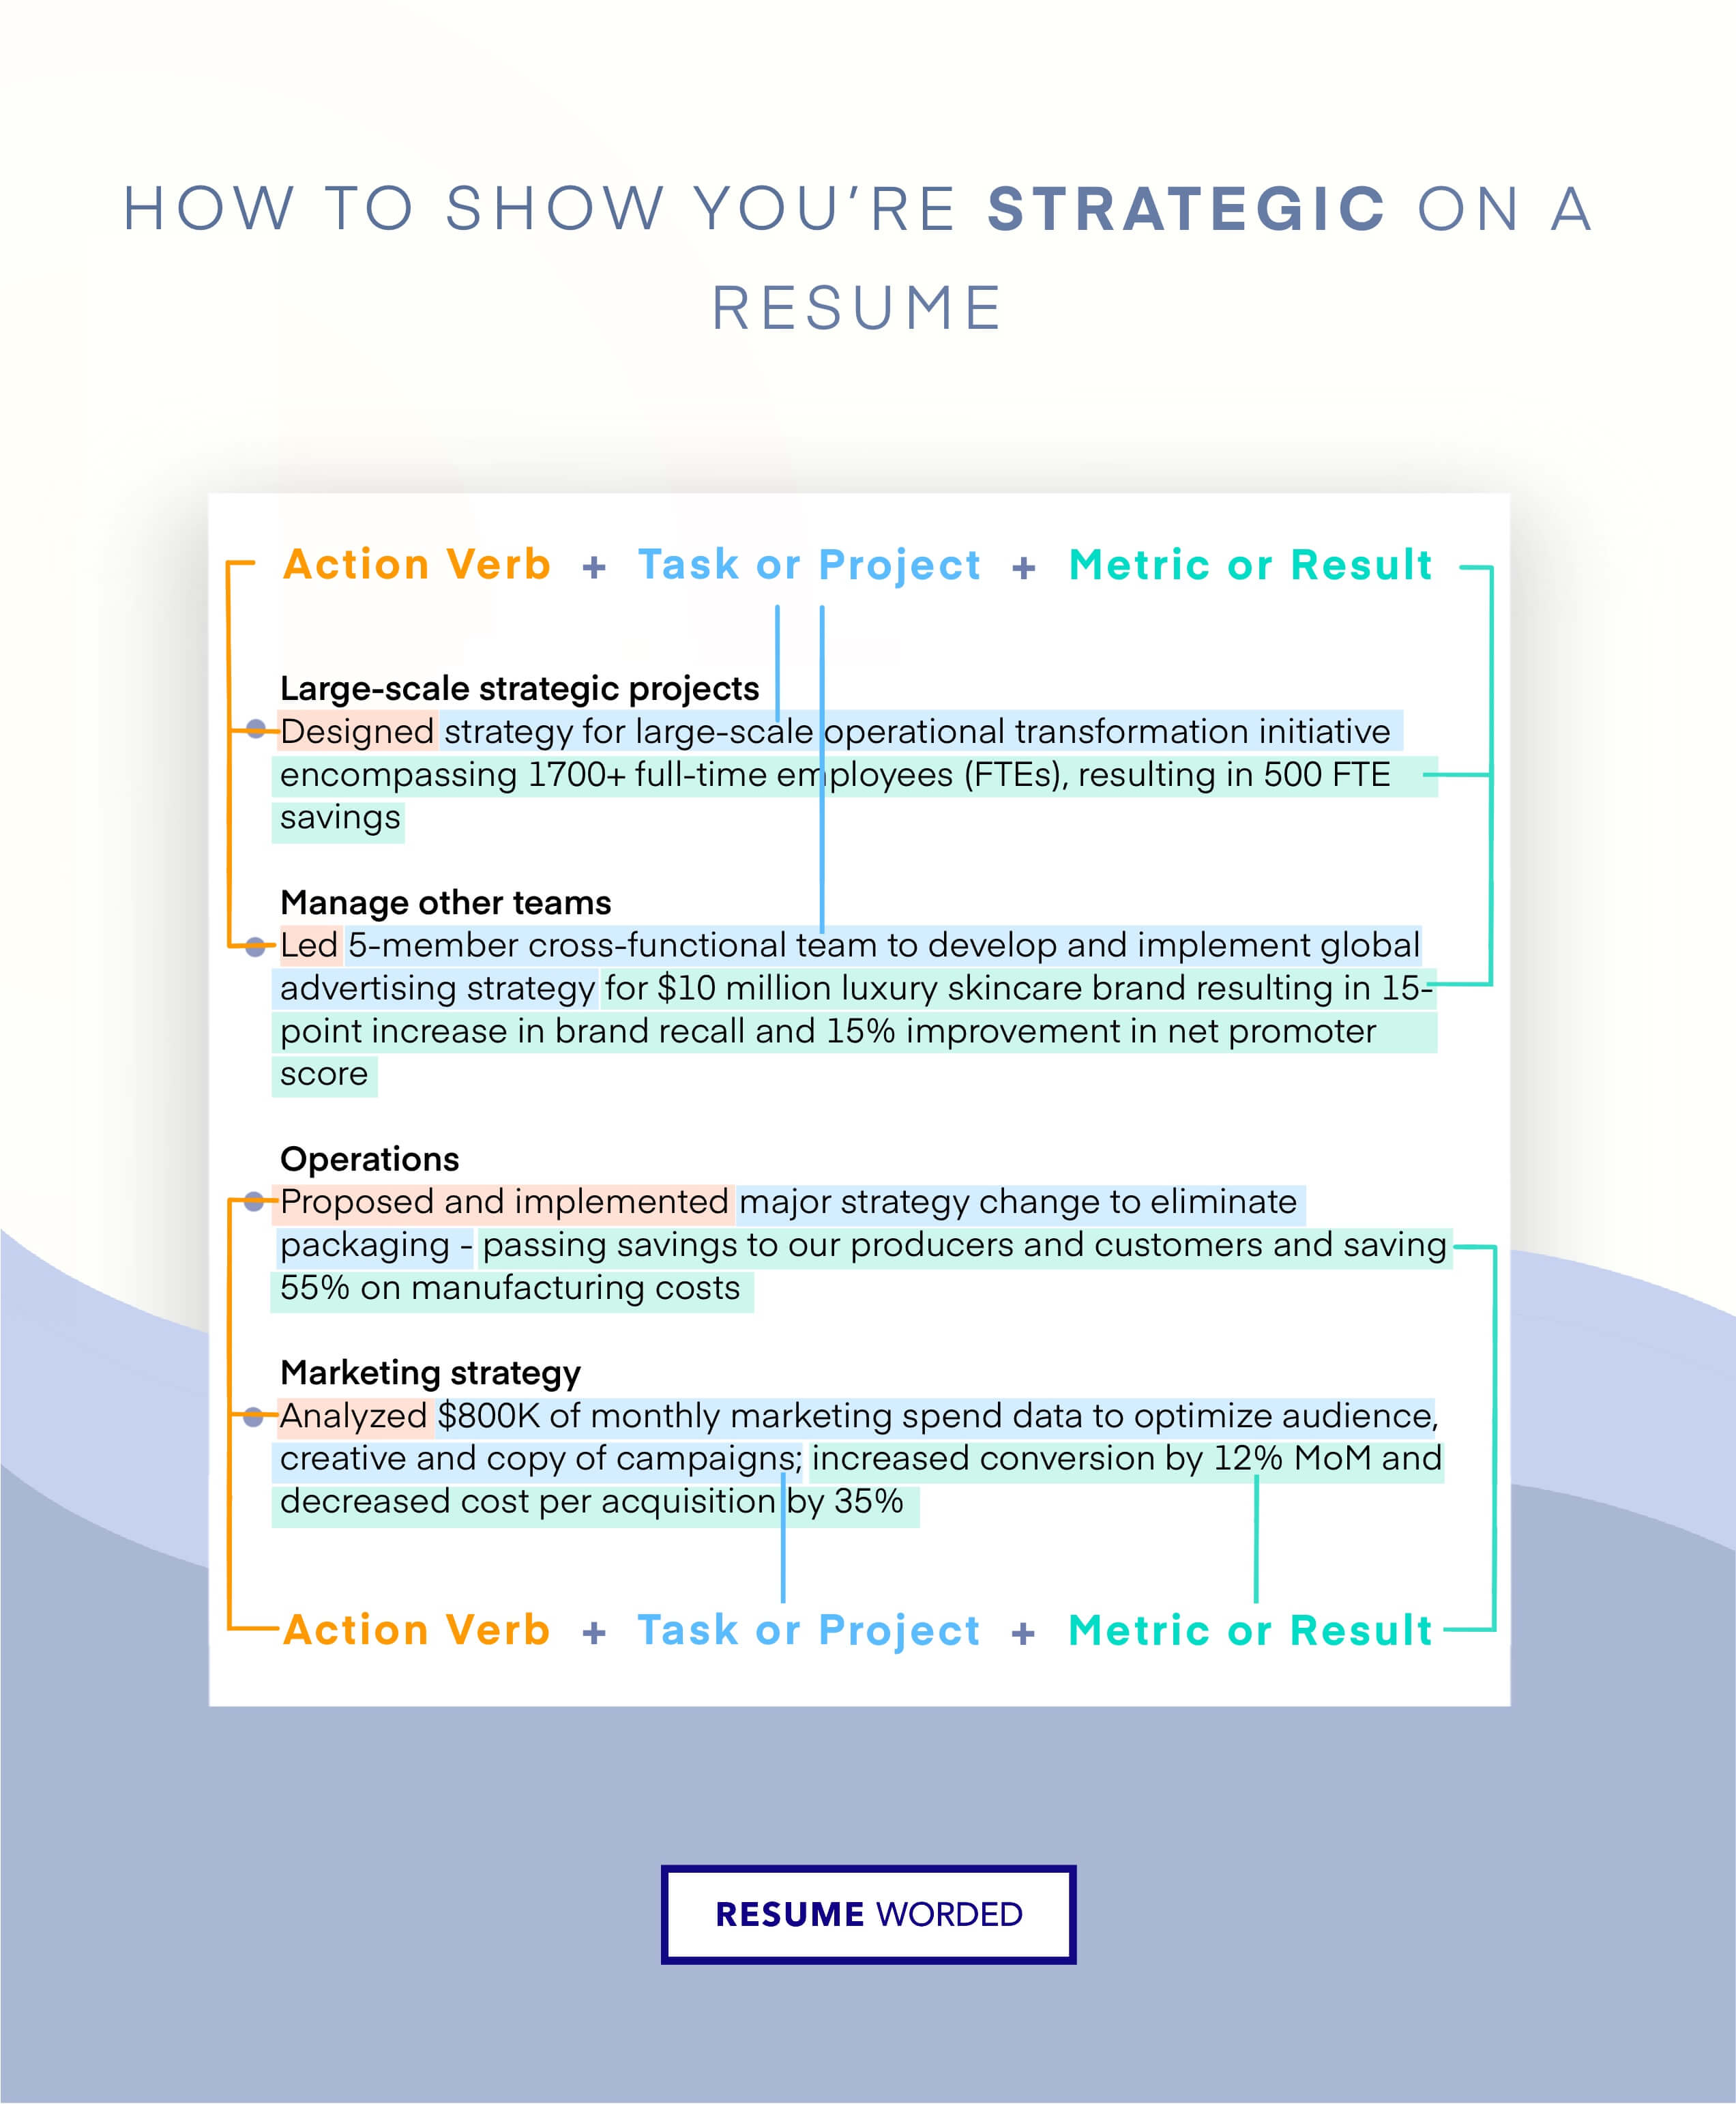 Showcase your strategic acumen - Sourcing Specialist CV